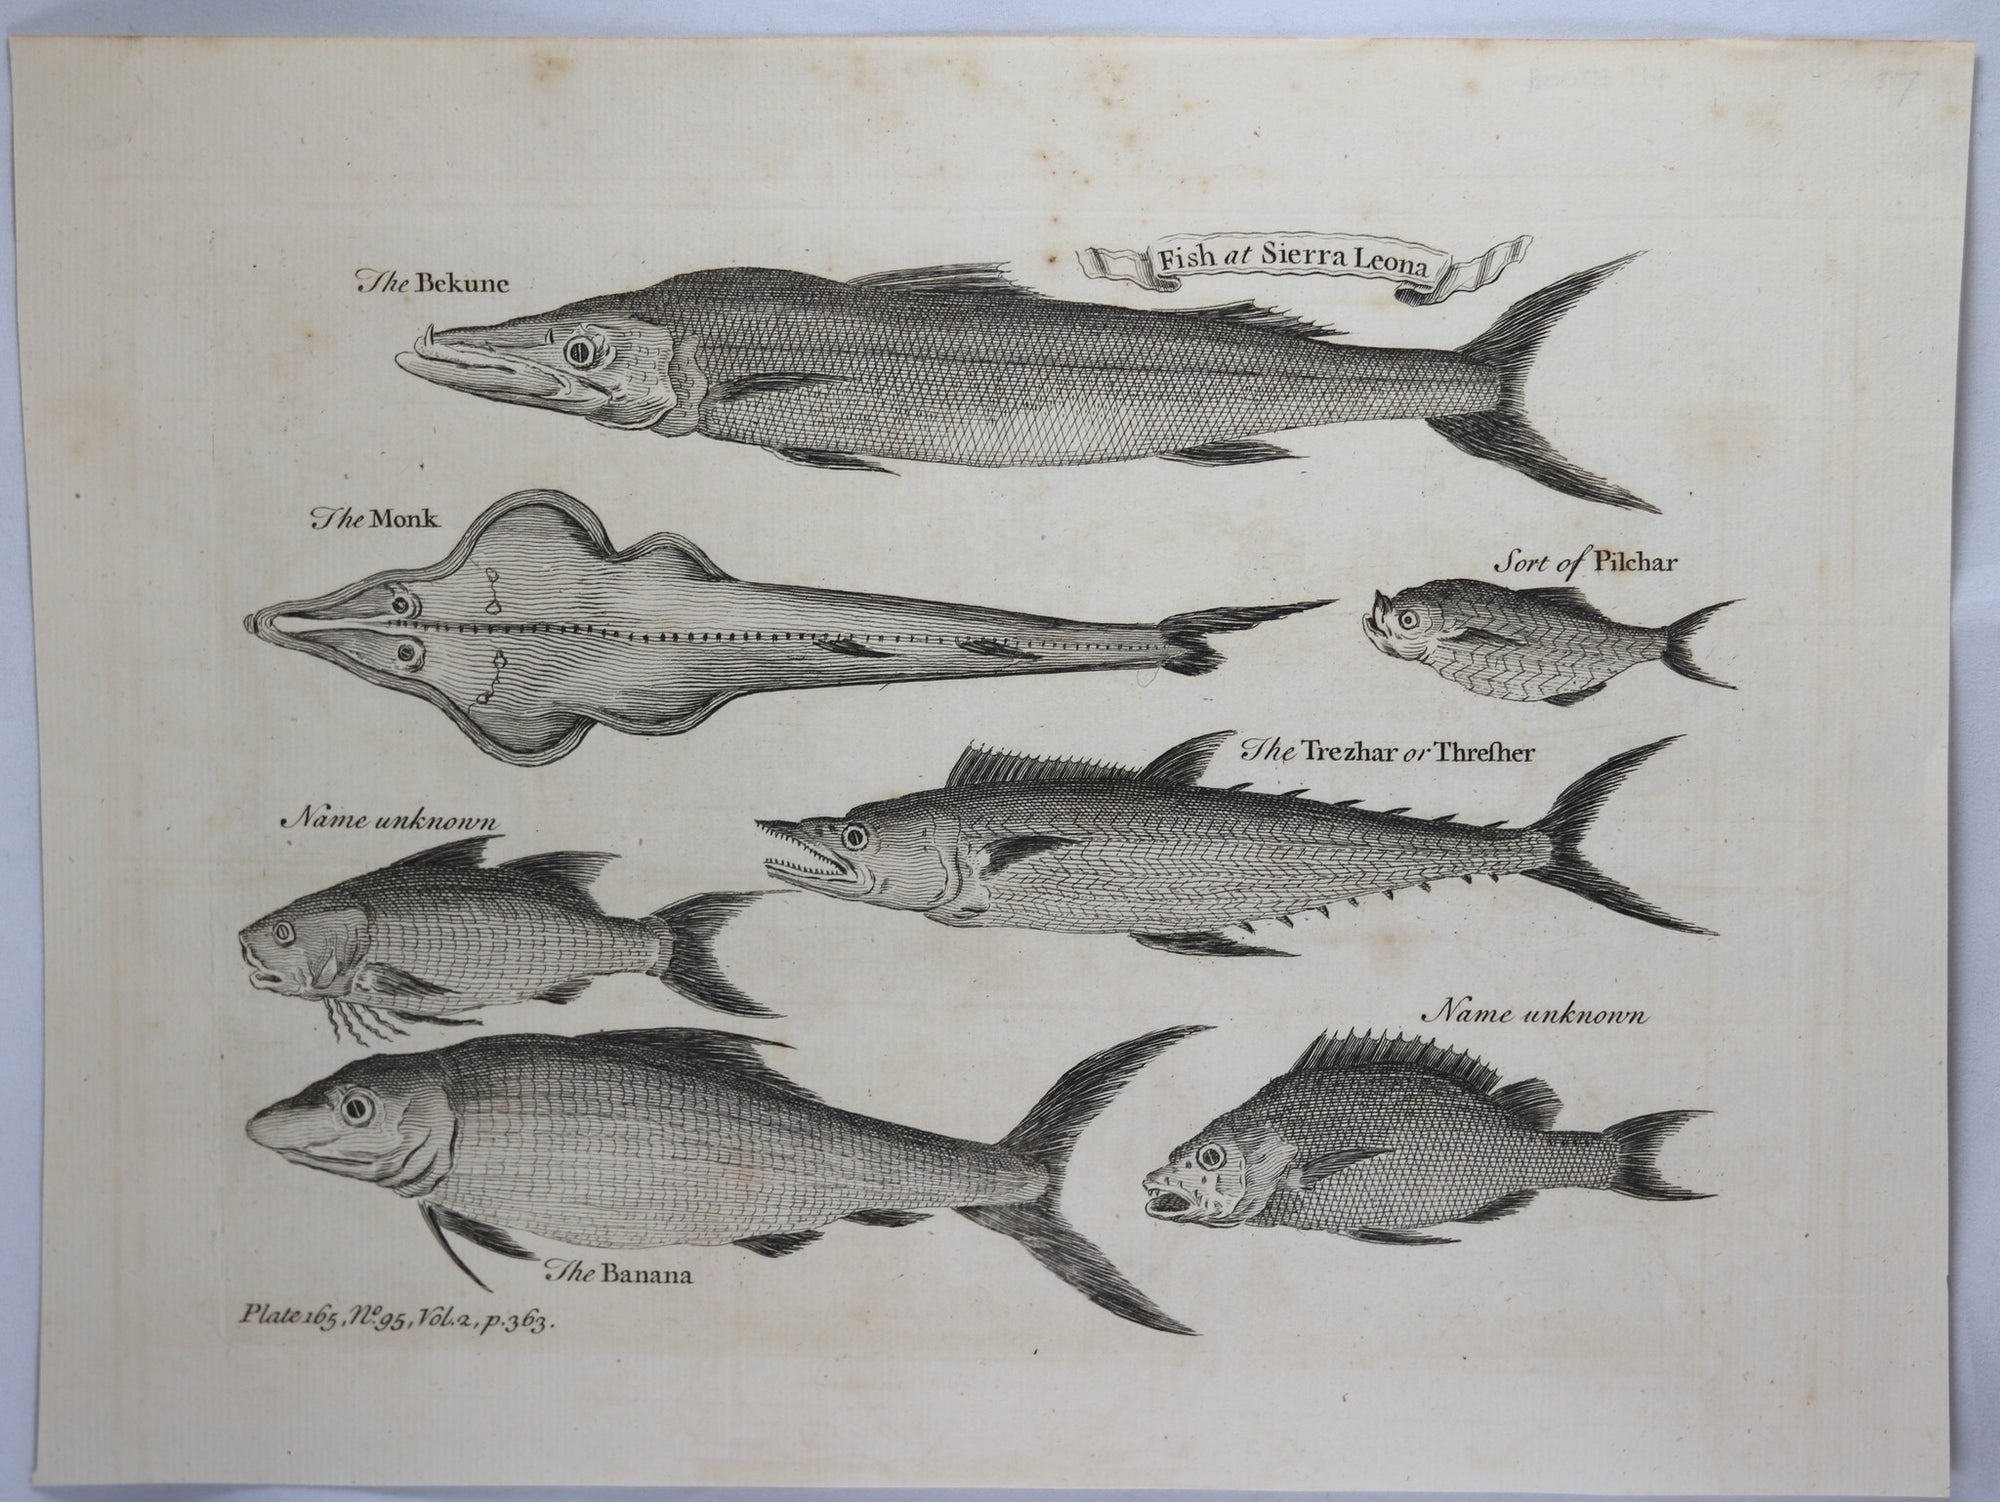 18th century print ‘Fish at Sierra Leona’ @1753